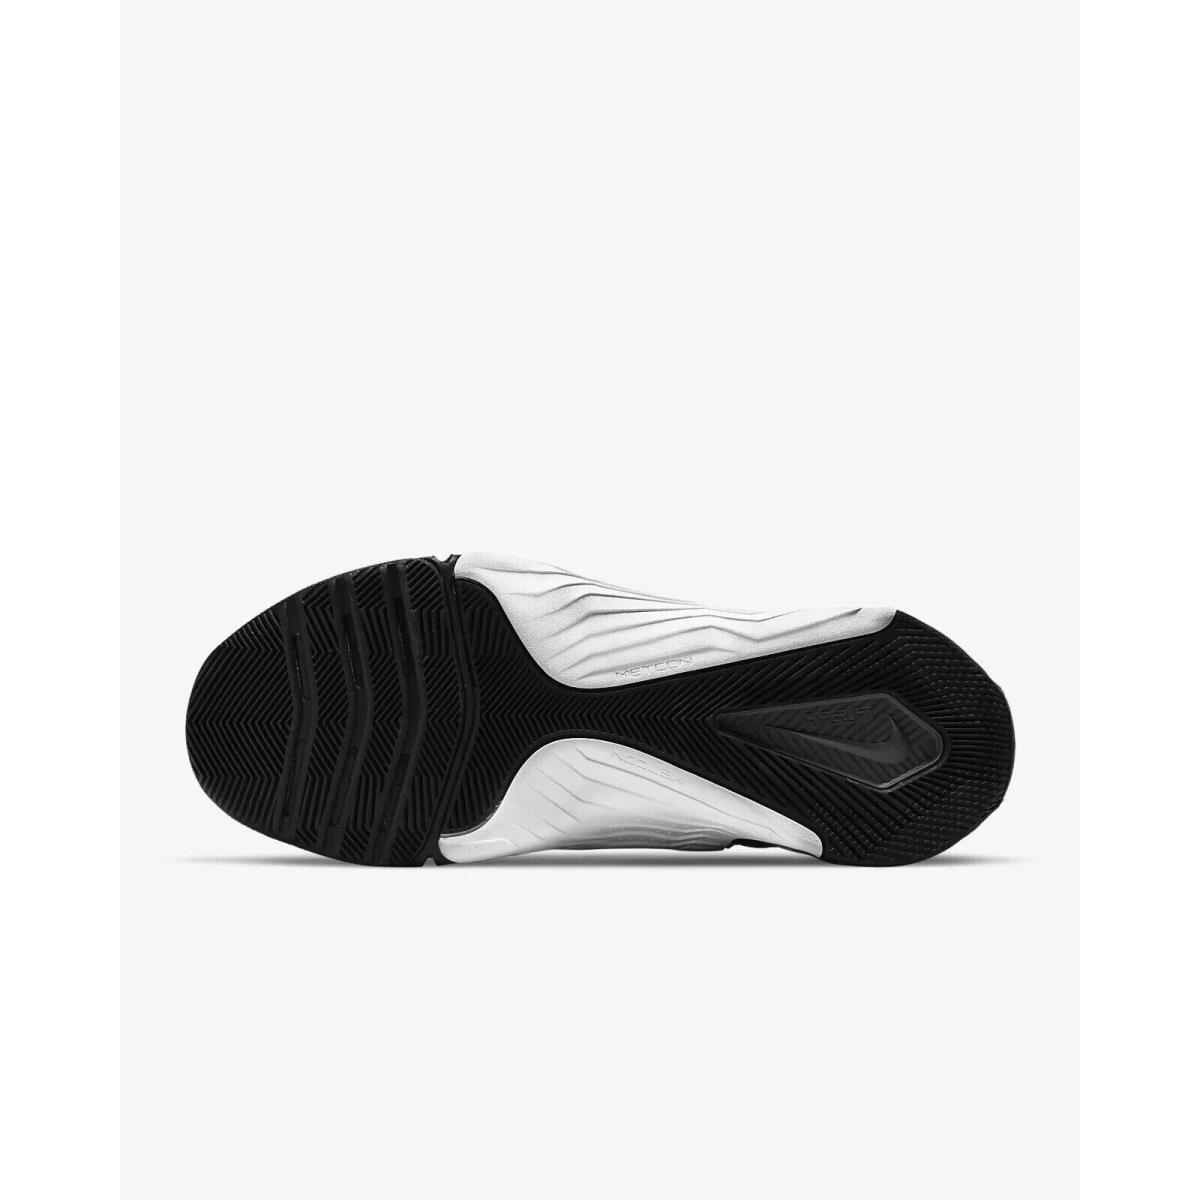 Nike shoes Metcon - BLACK/MTLC DARK GREY WHITE 4